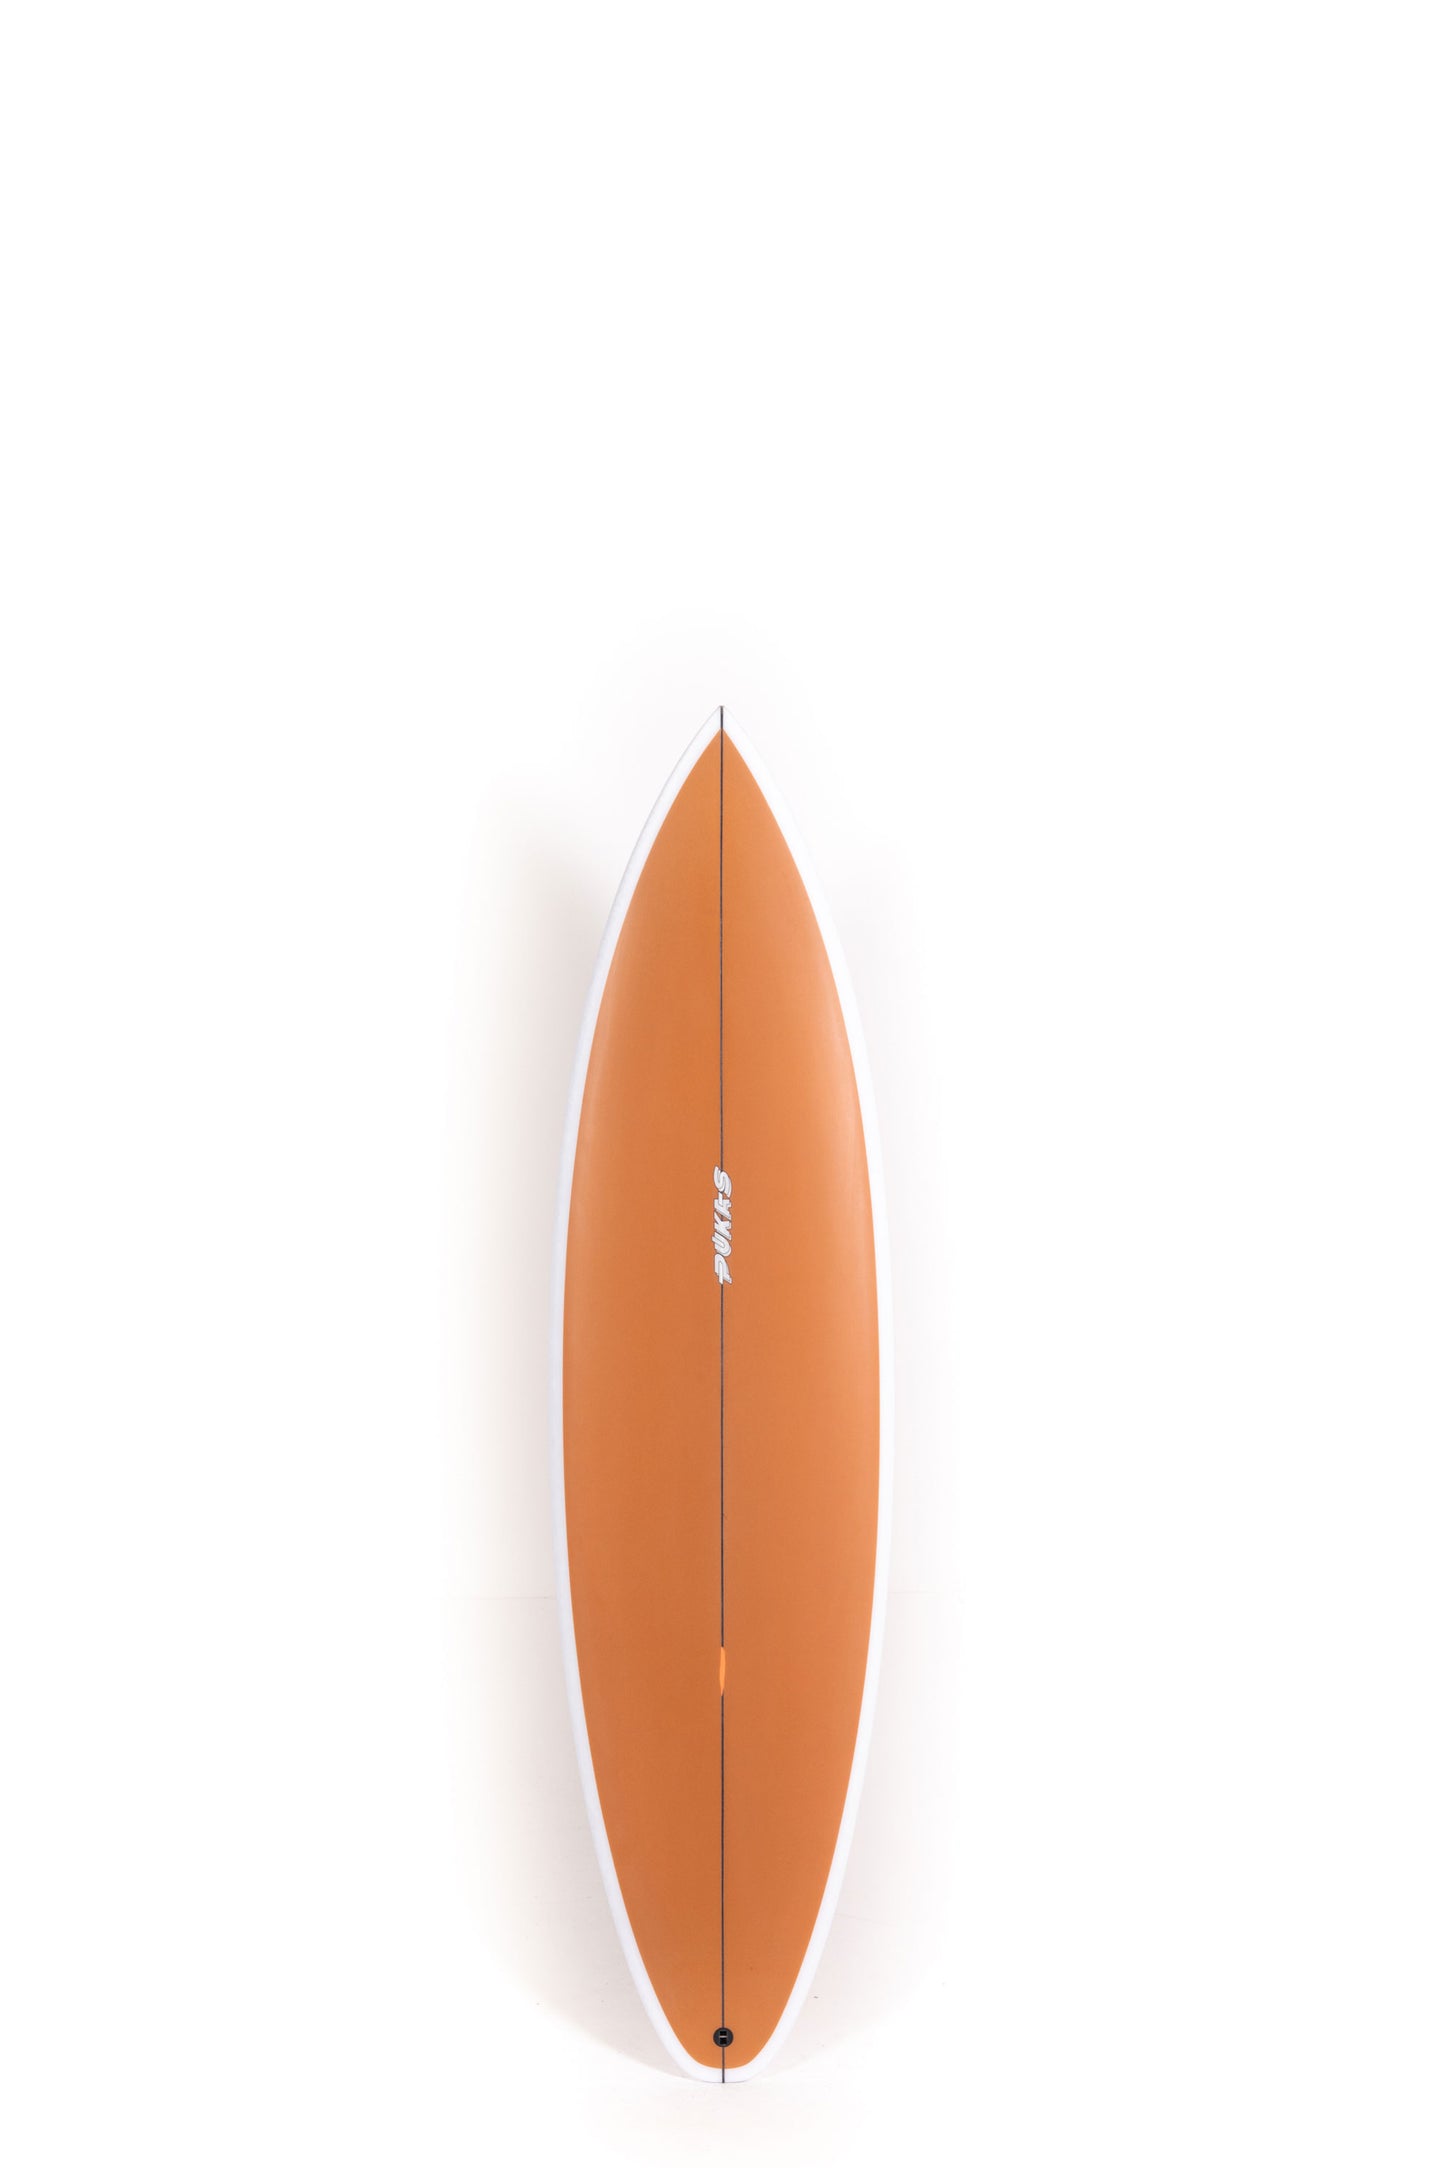 Pukas-Surf-Shop-Pukas-Christenson-Surfboards-Water-lion-Chris-Christenson-6_0